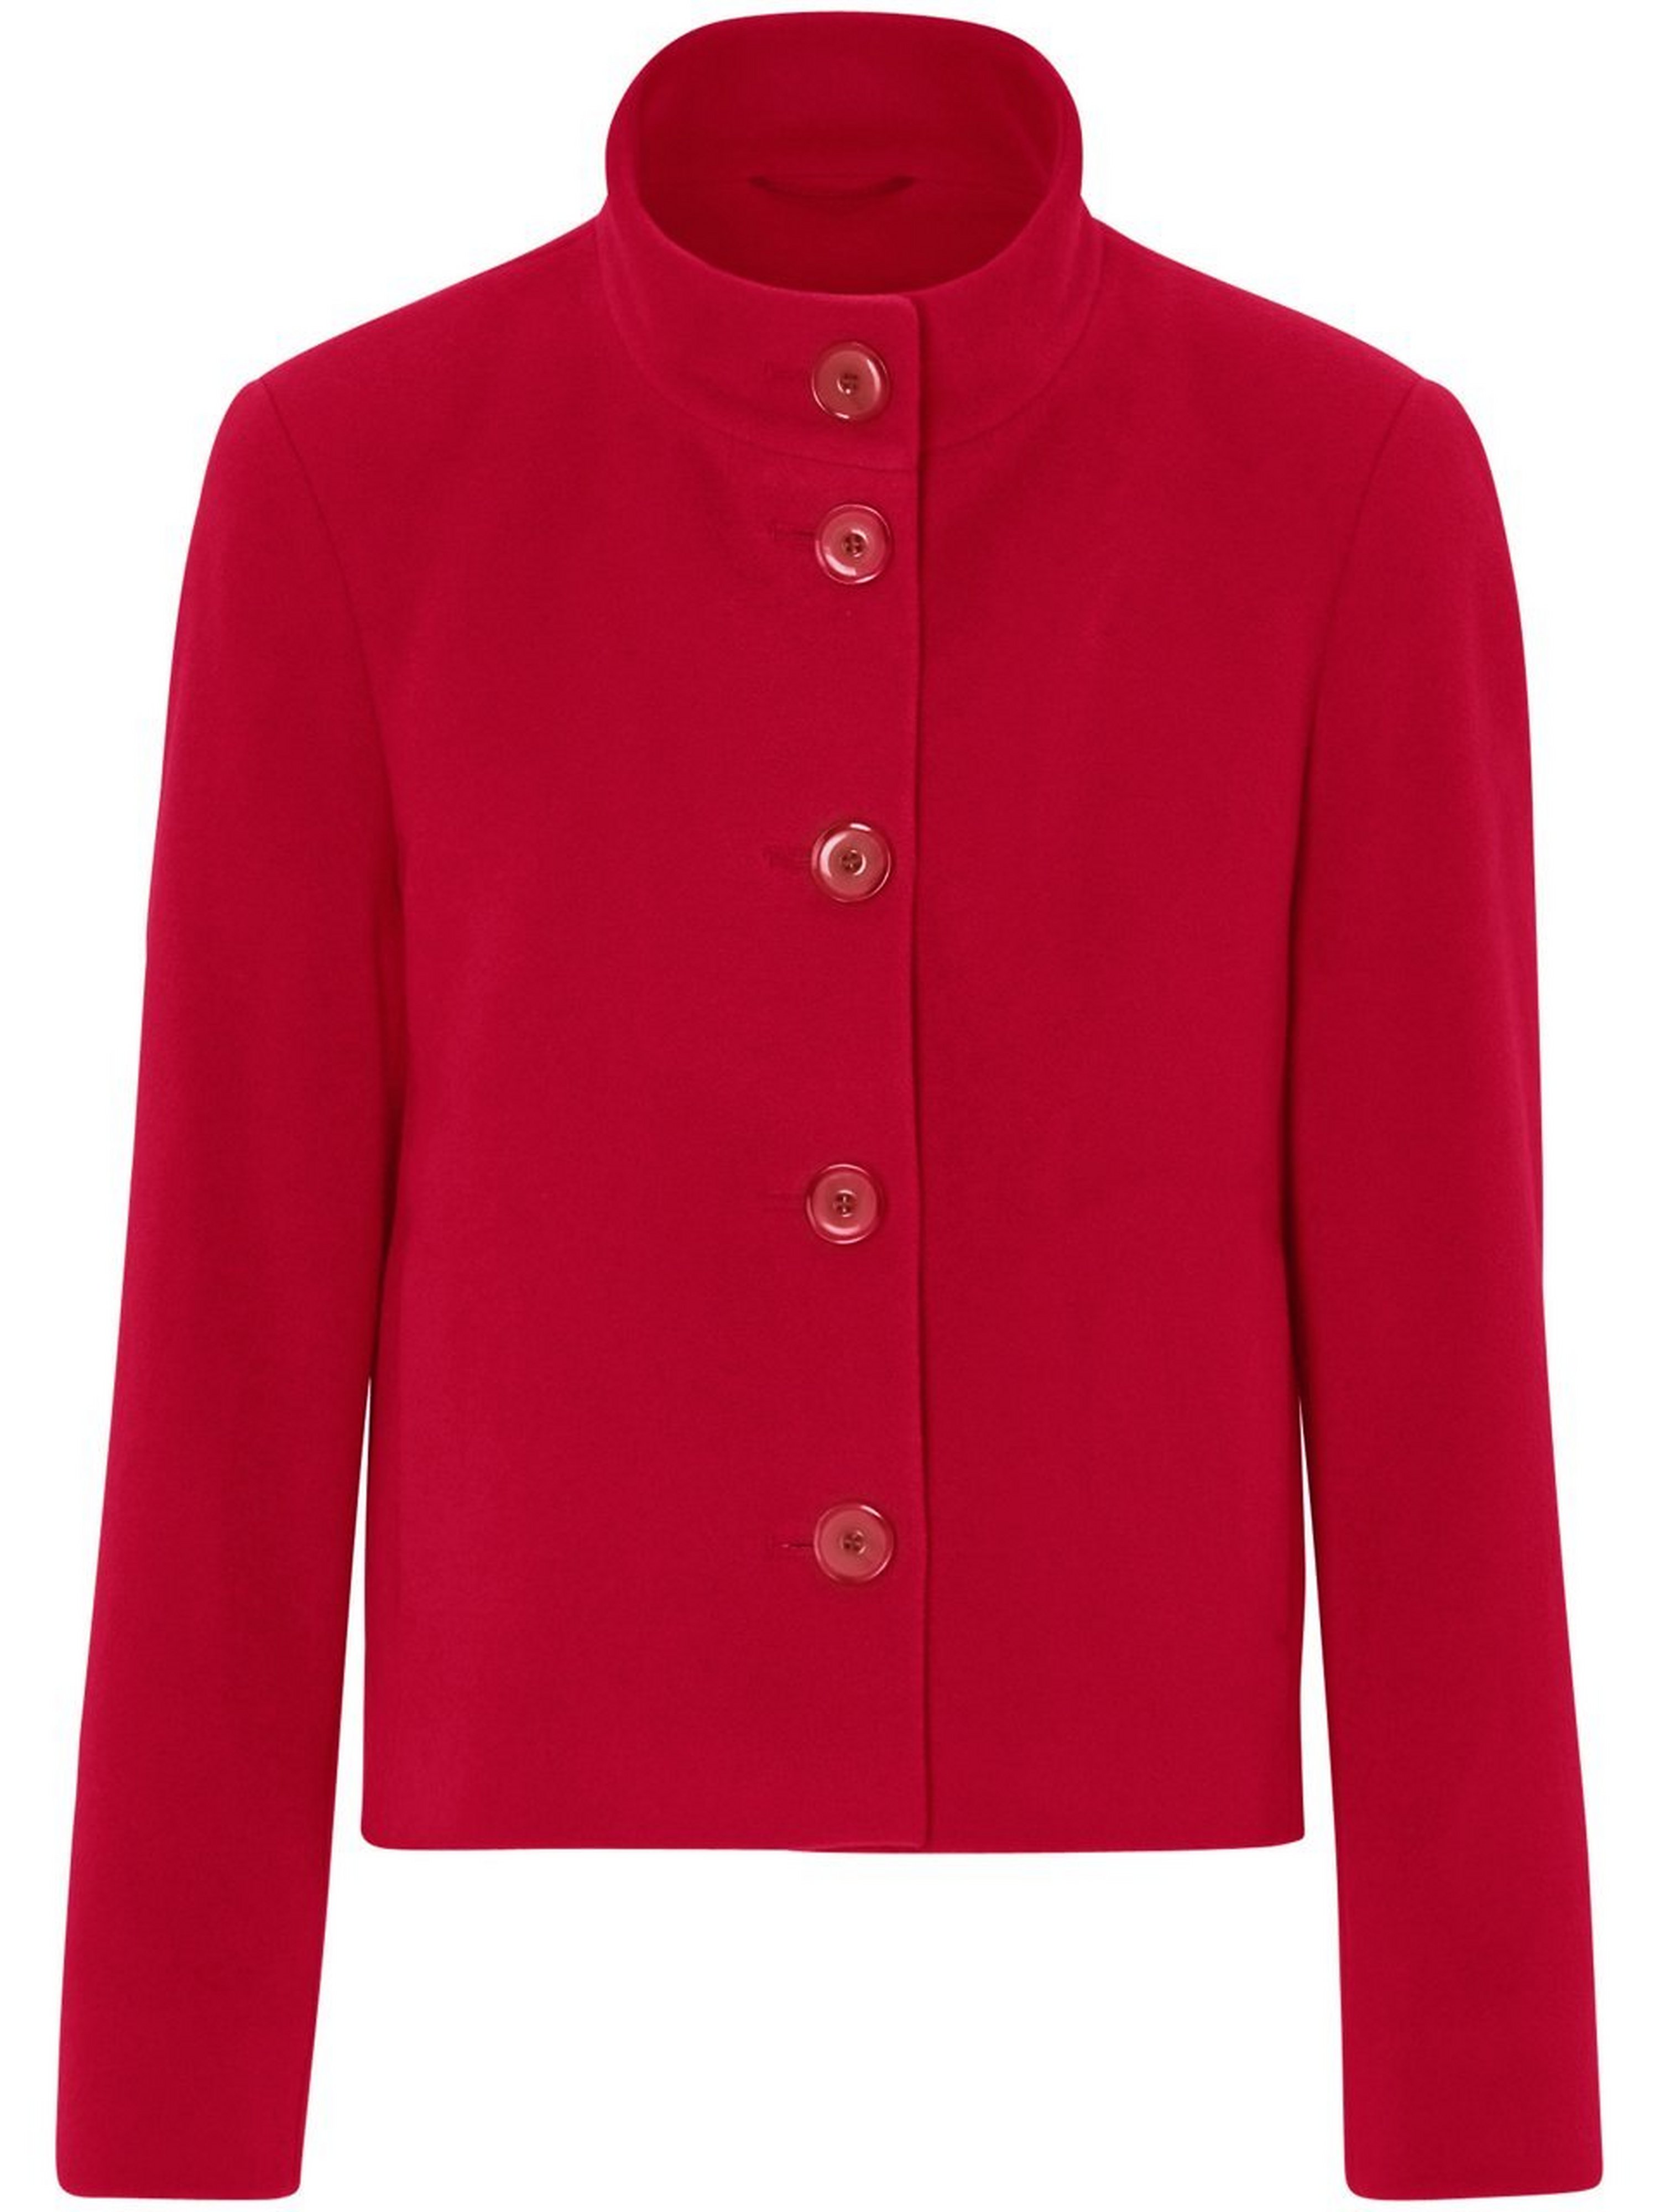 Jacket in slightly shorter length Uta Raasch red